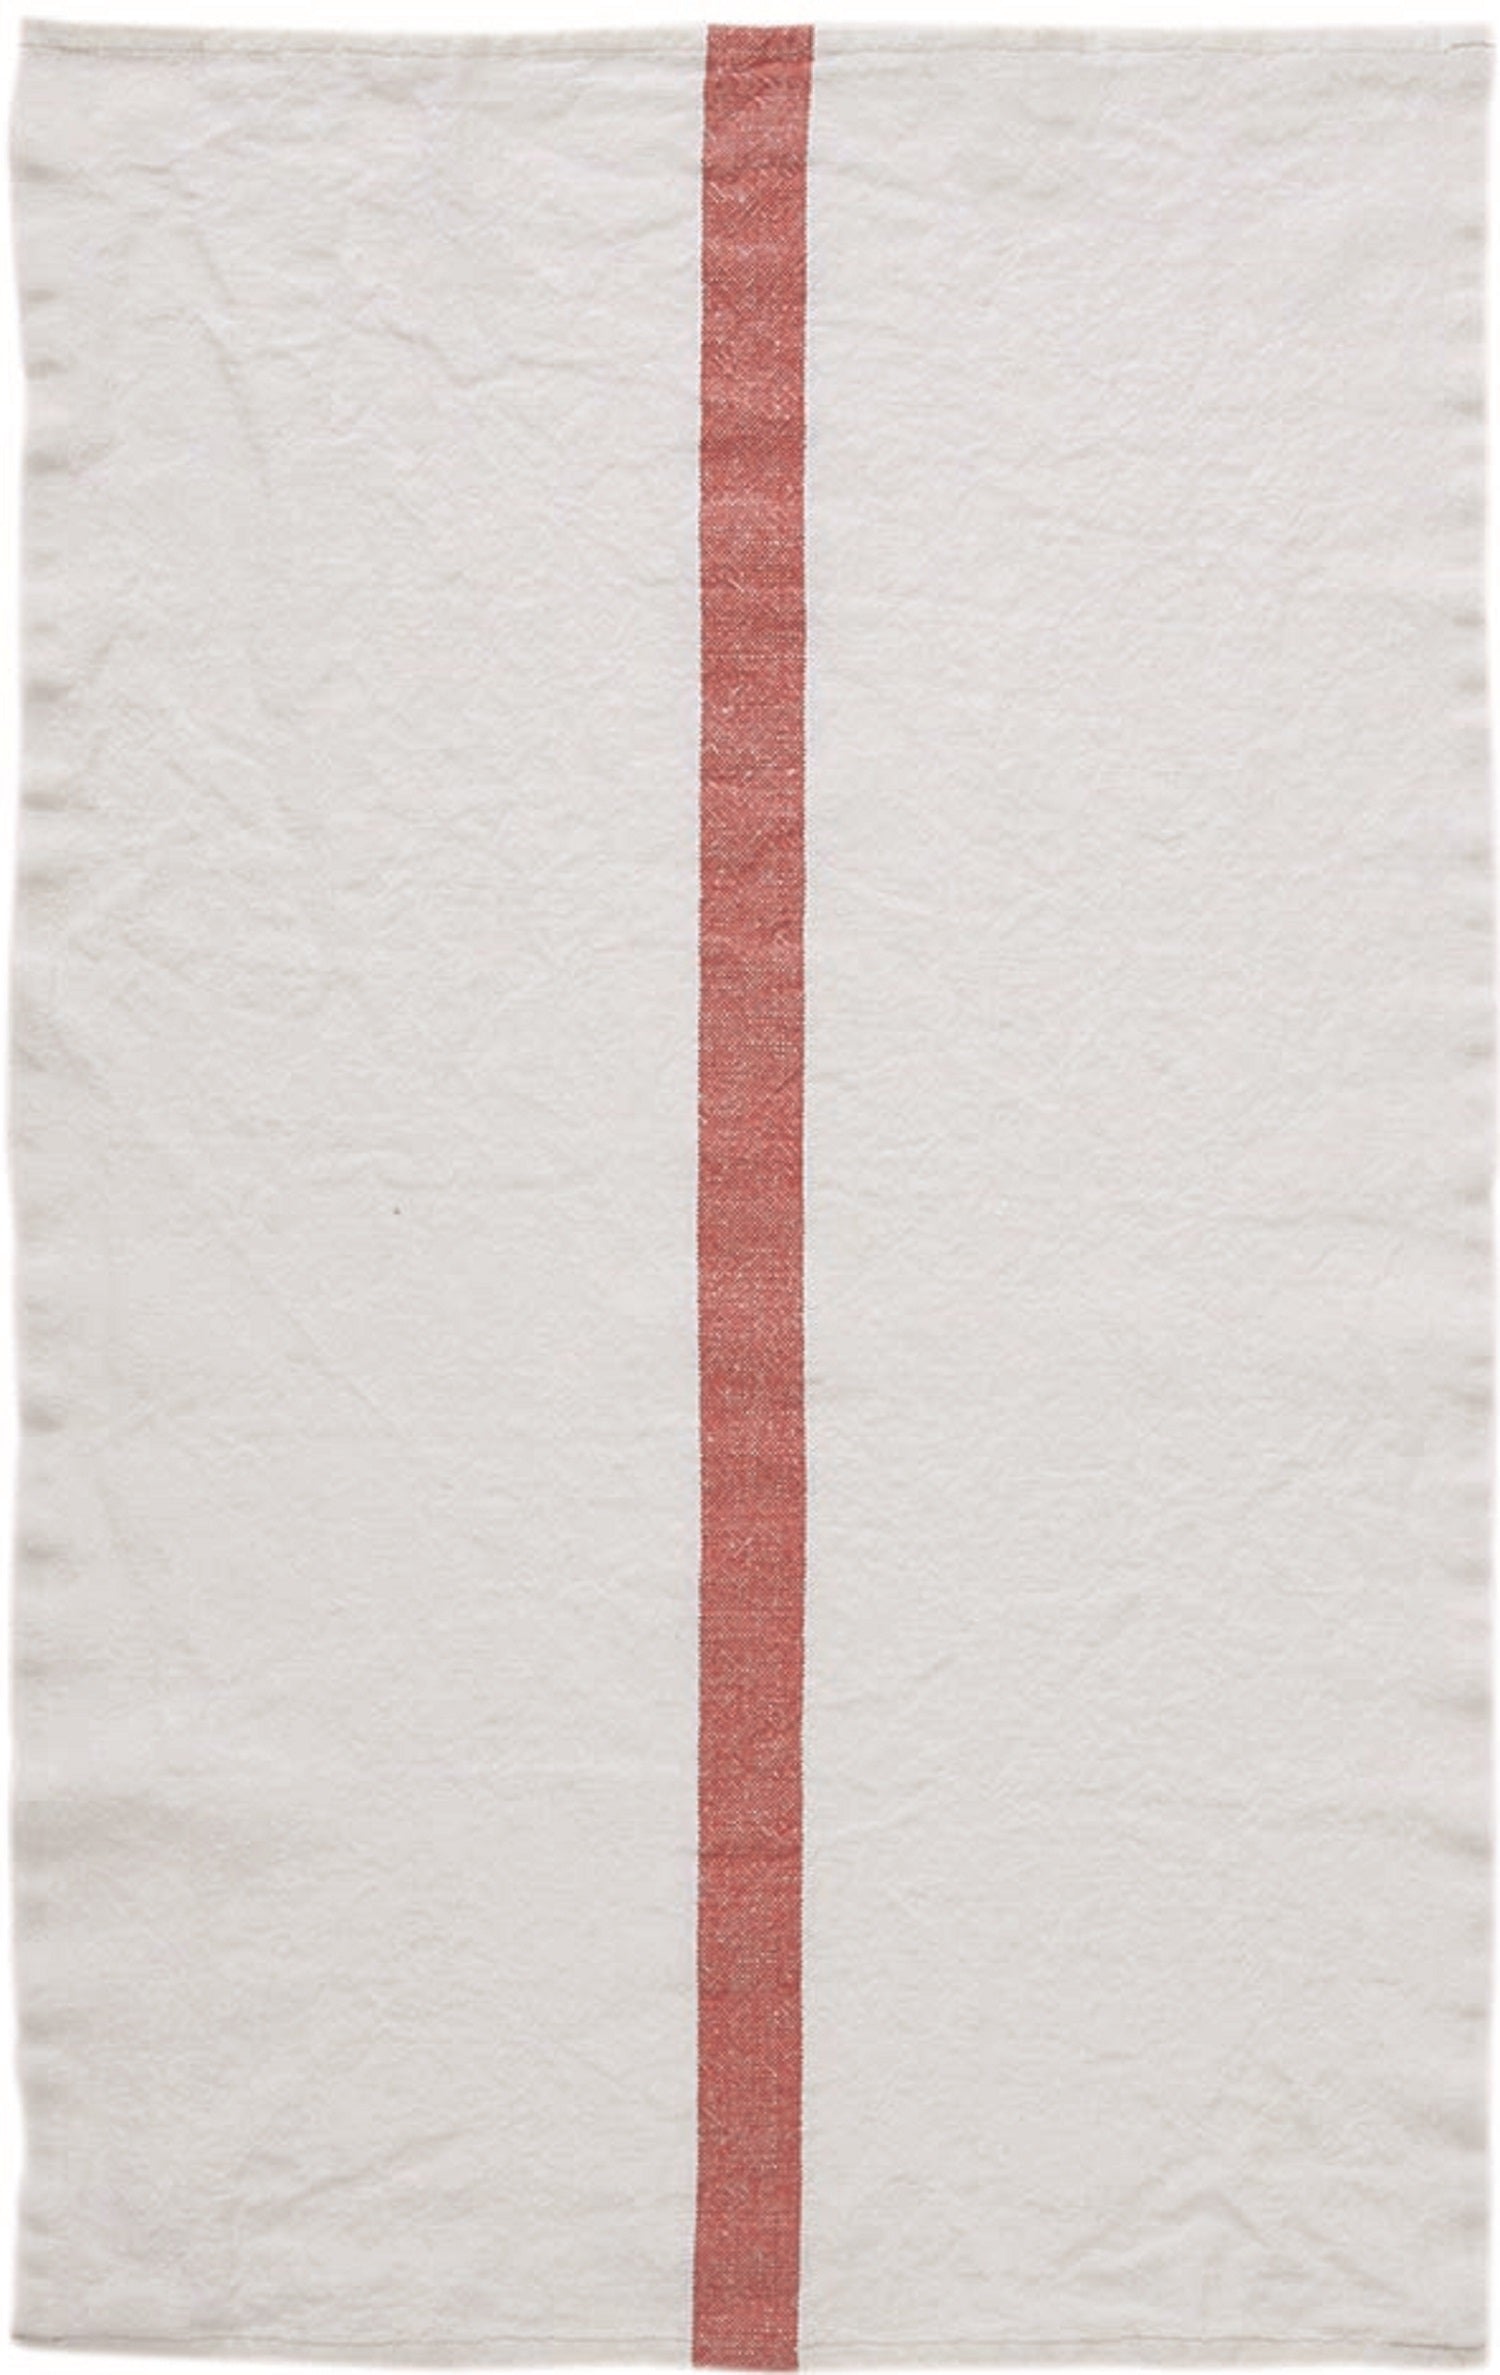 Charvet Editions "Doudou Stripe" (White & Red), White woven linen tea towel. Made in France.